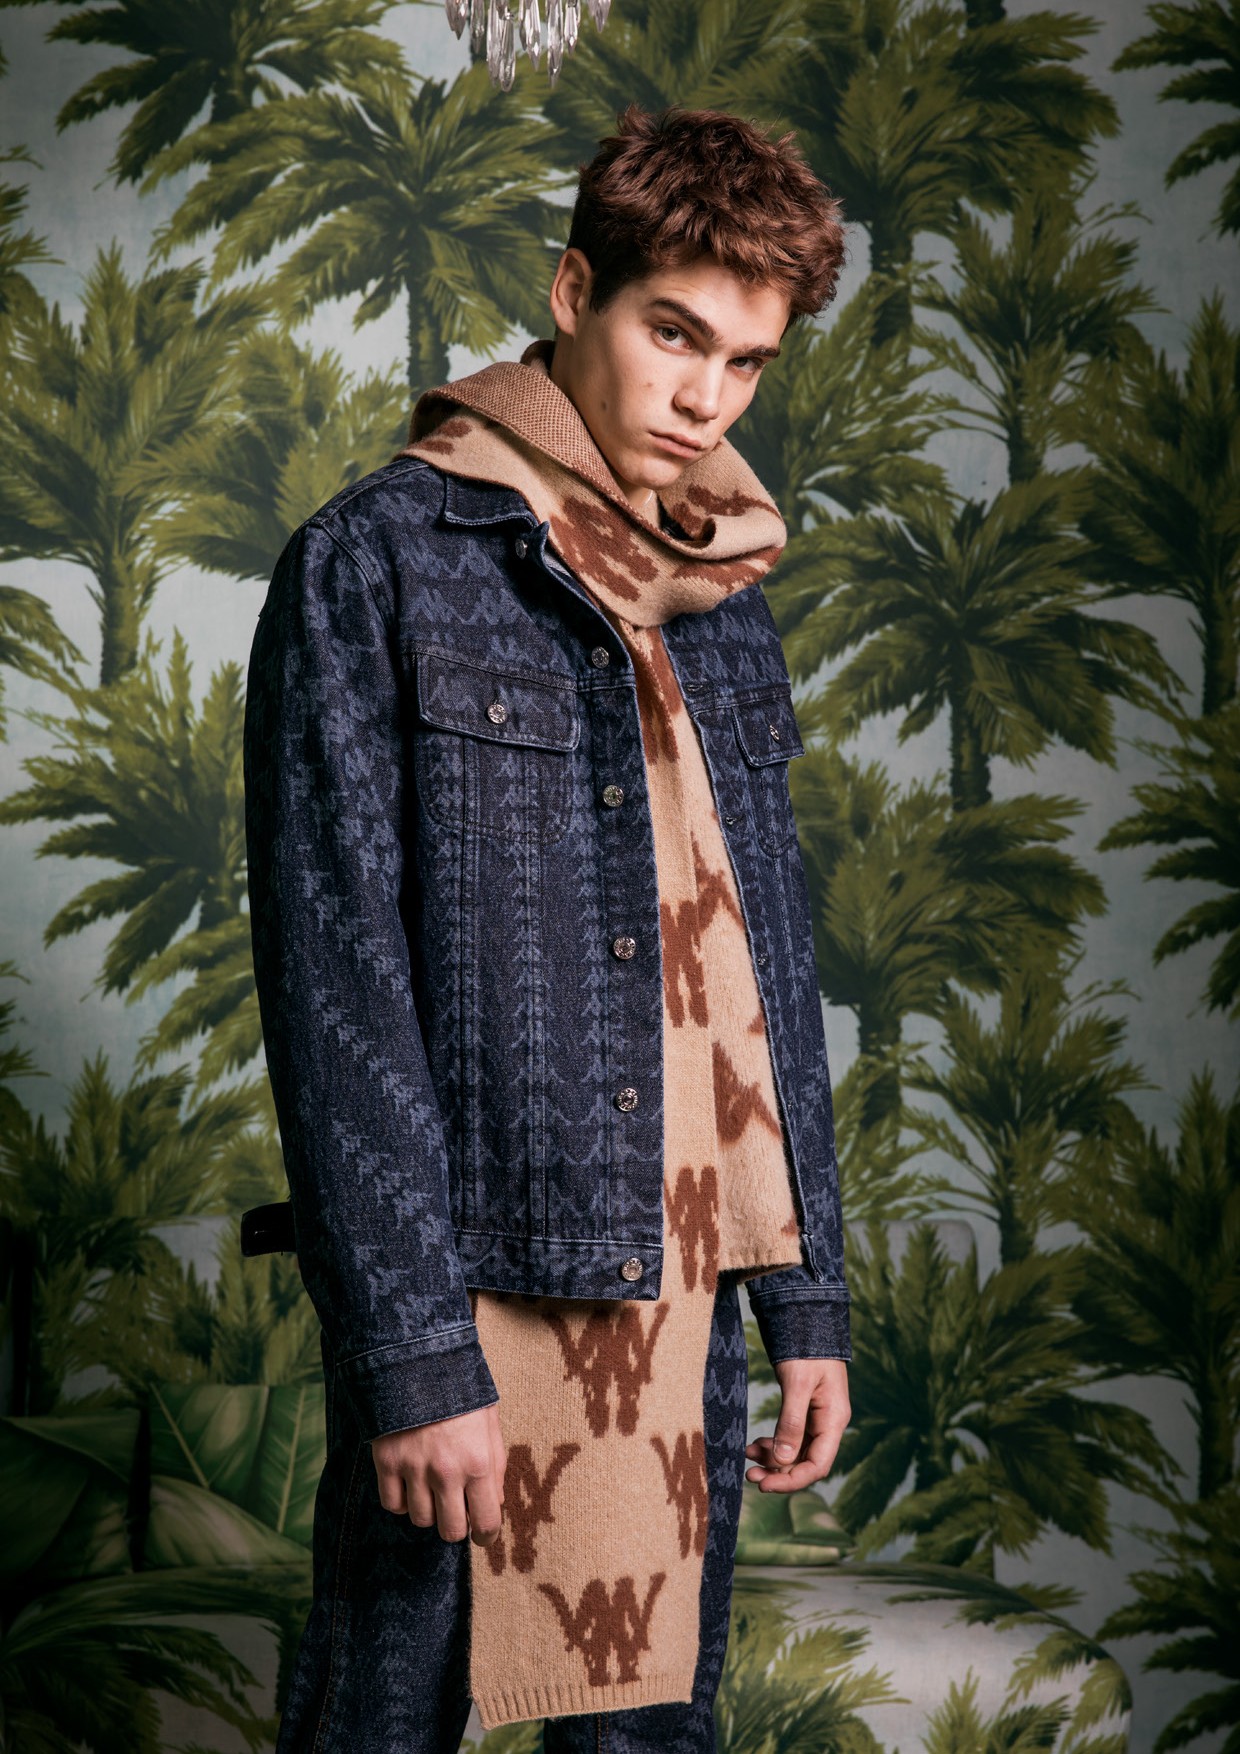 Kappa x Danilo Paura — Adon | Men's Fashion and Style Magazine